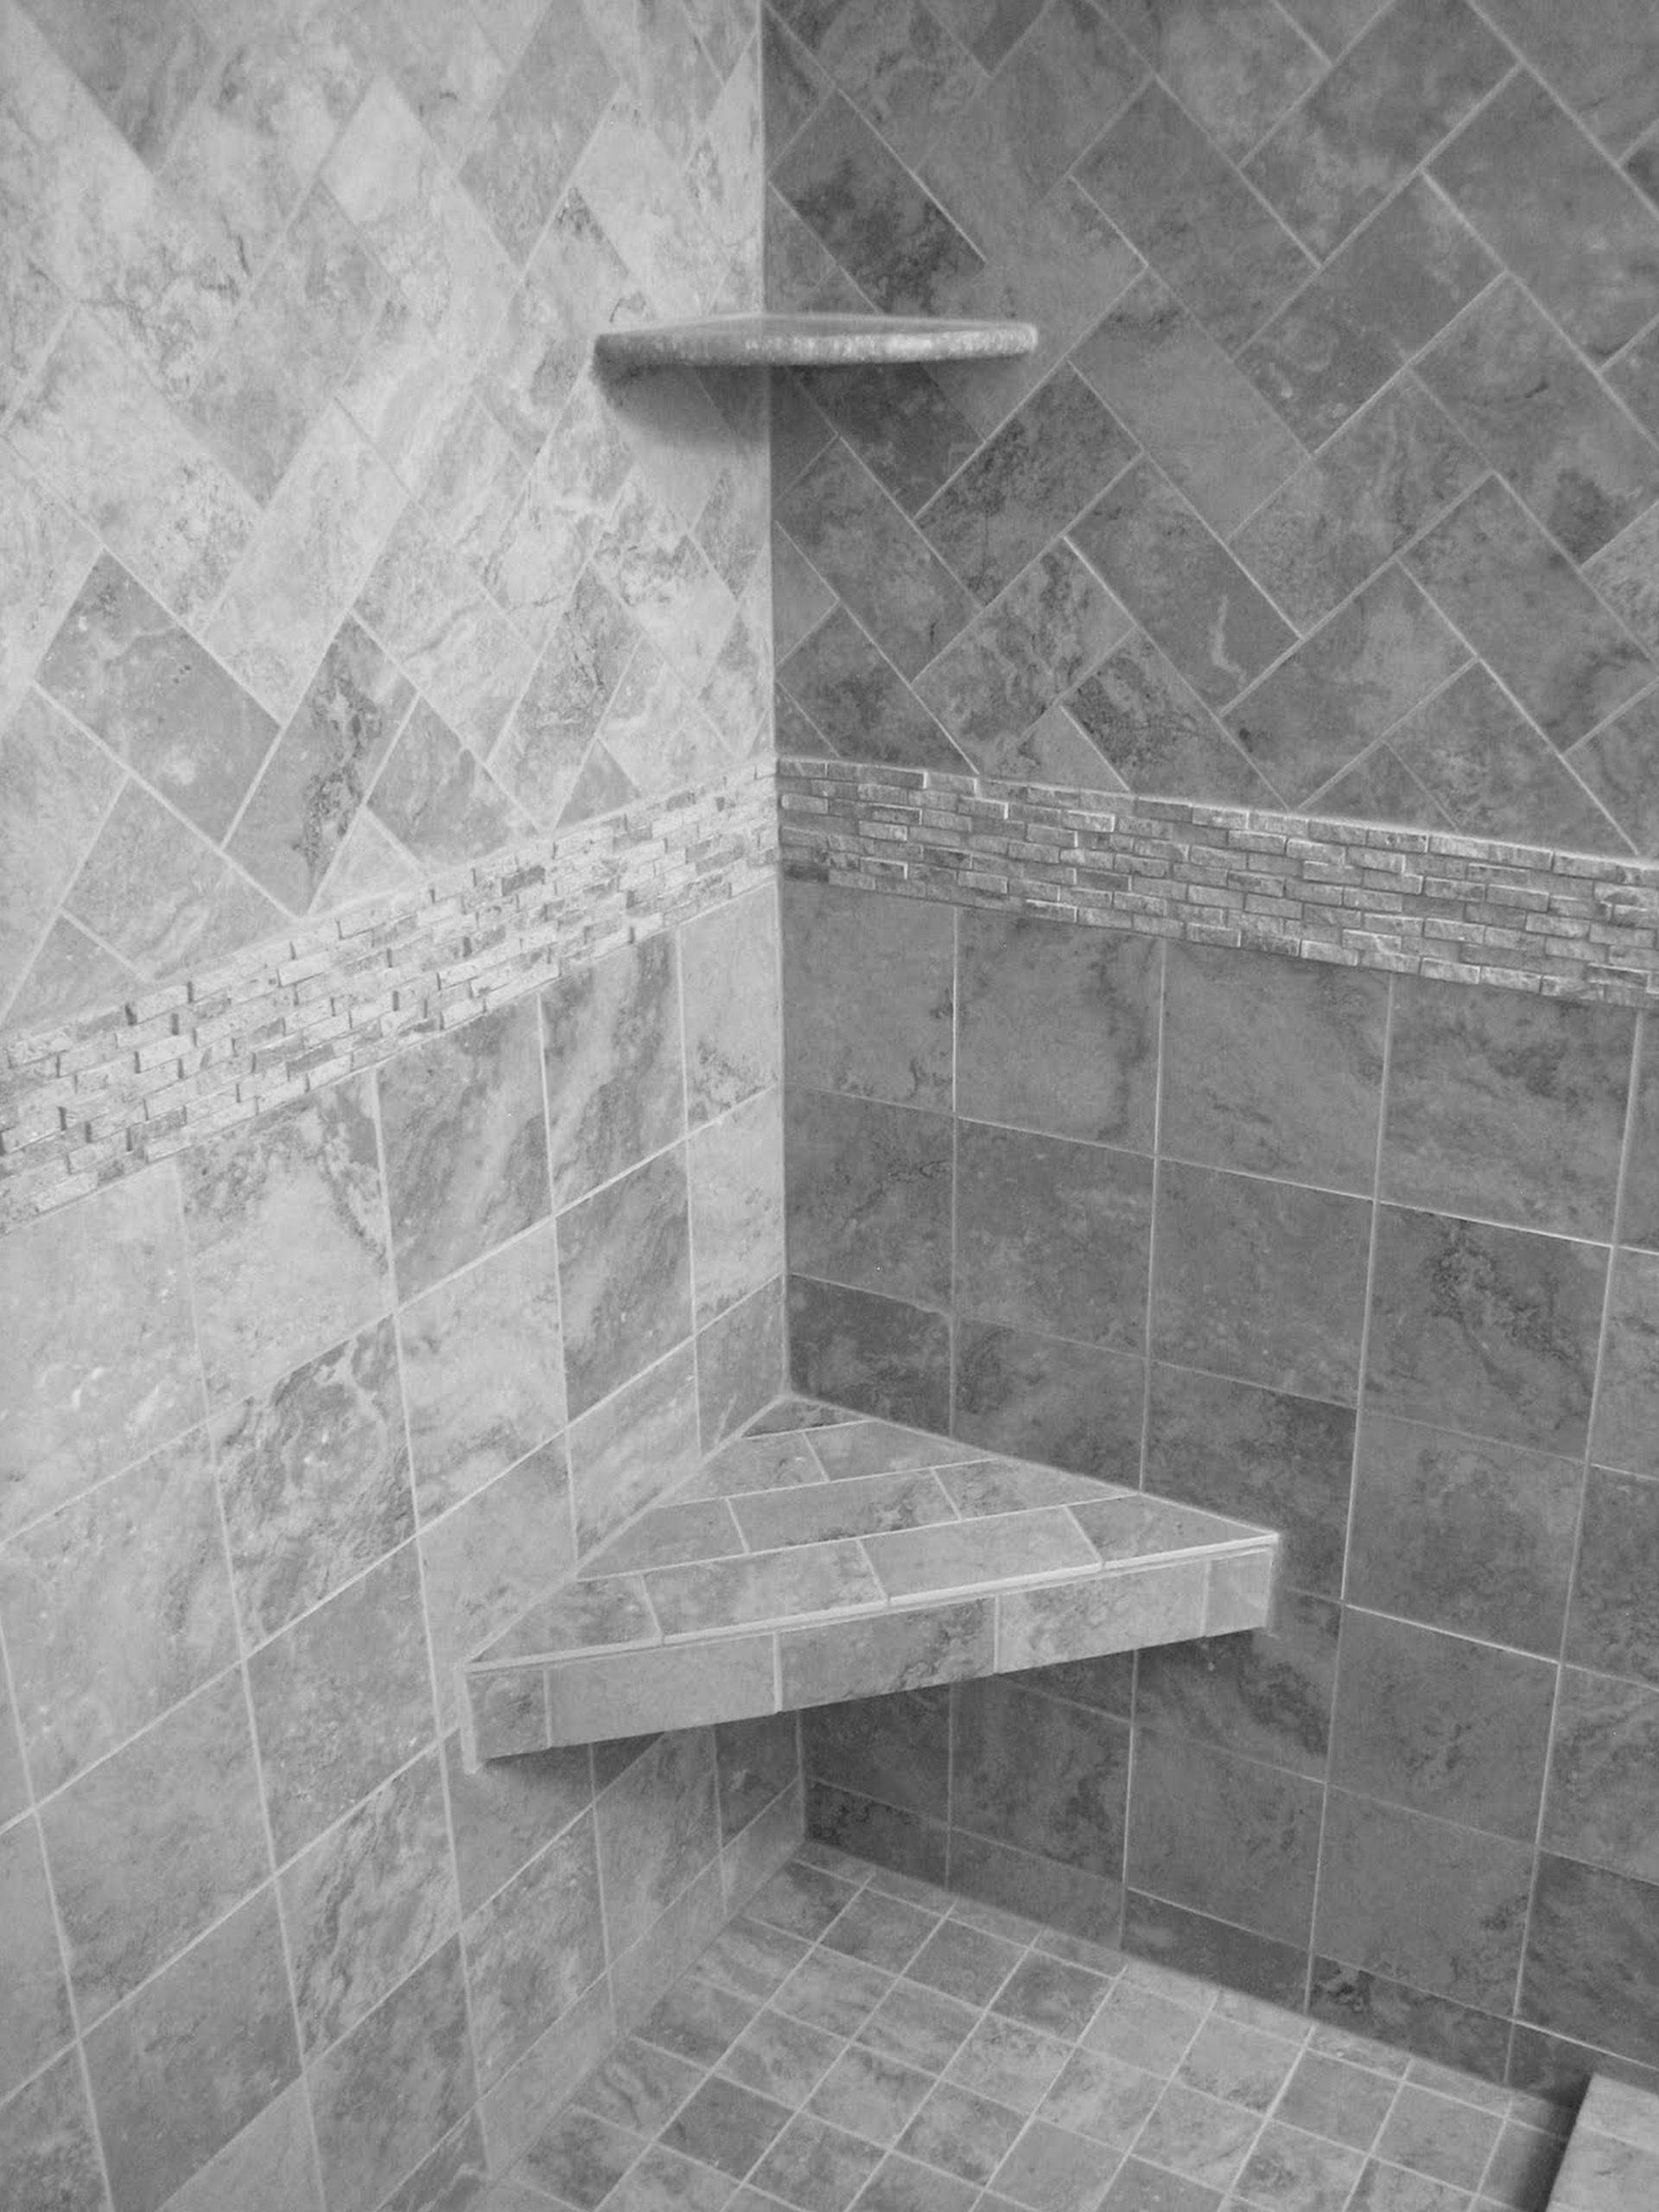 Bathroom Tiles Design Images
 Home Depot Bathroom Tile Designs – HomesFeed